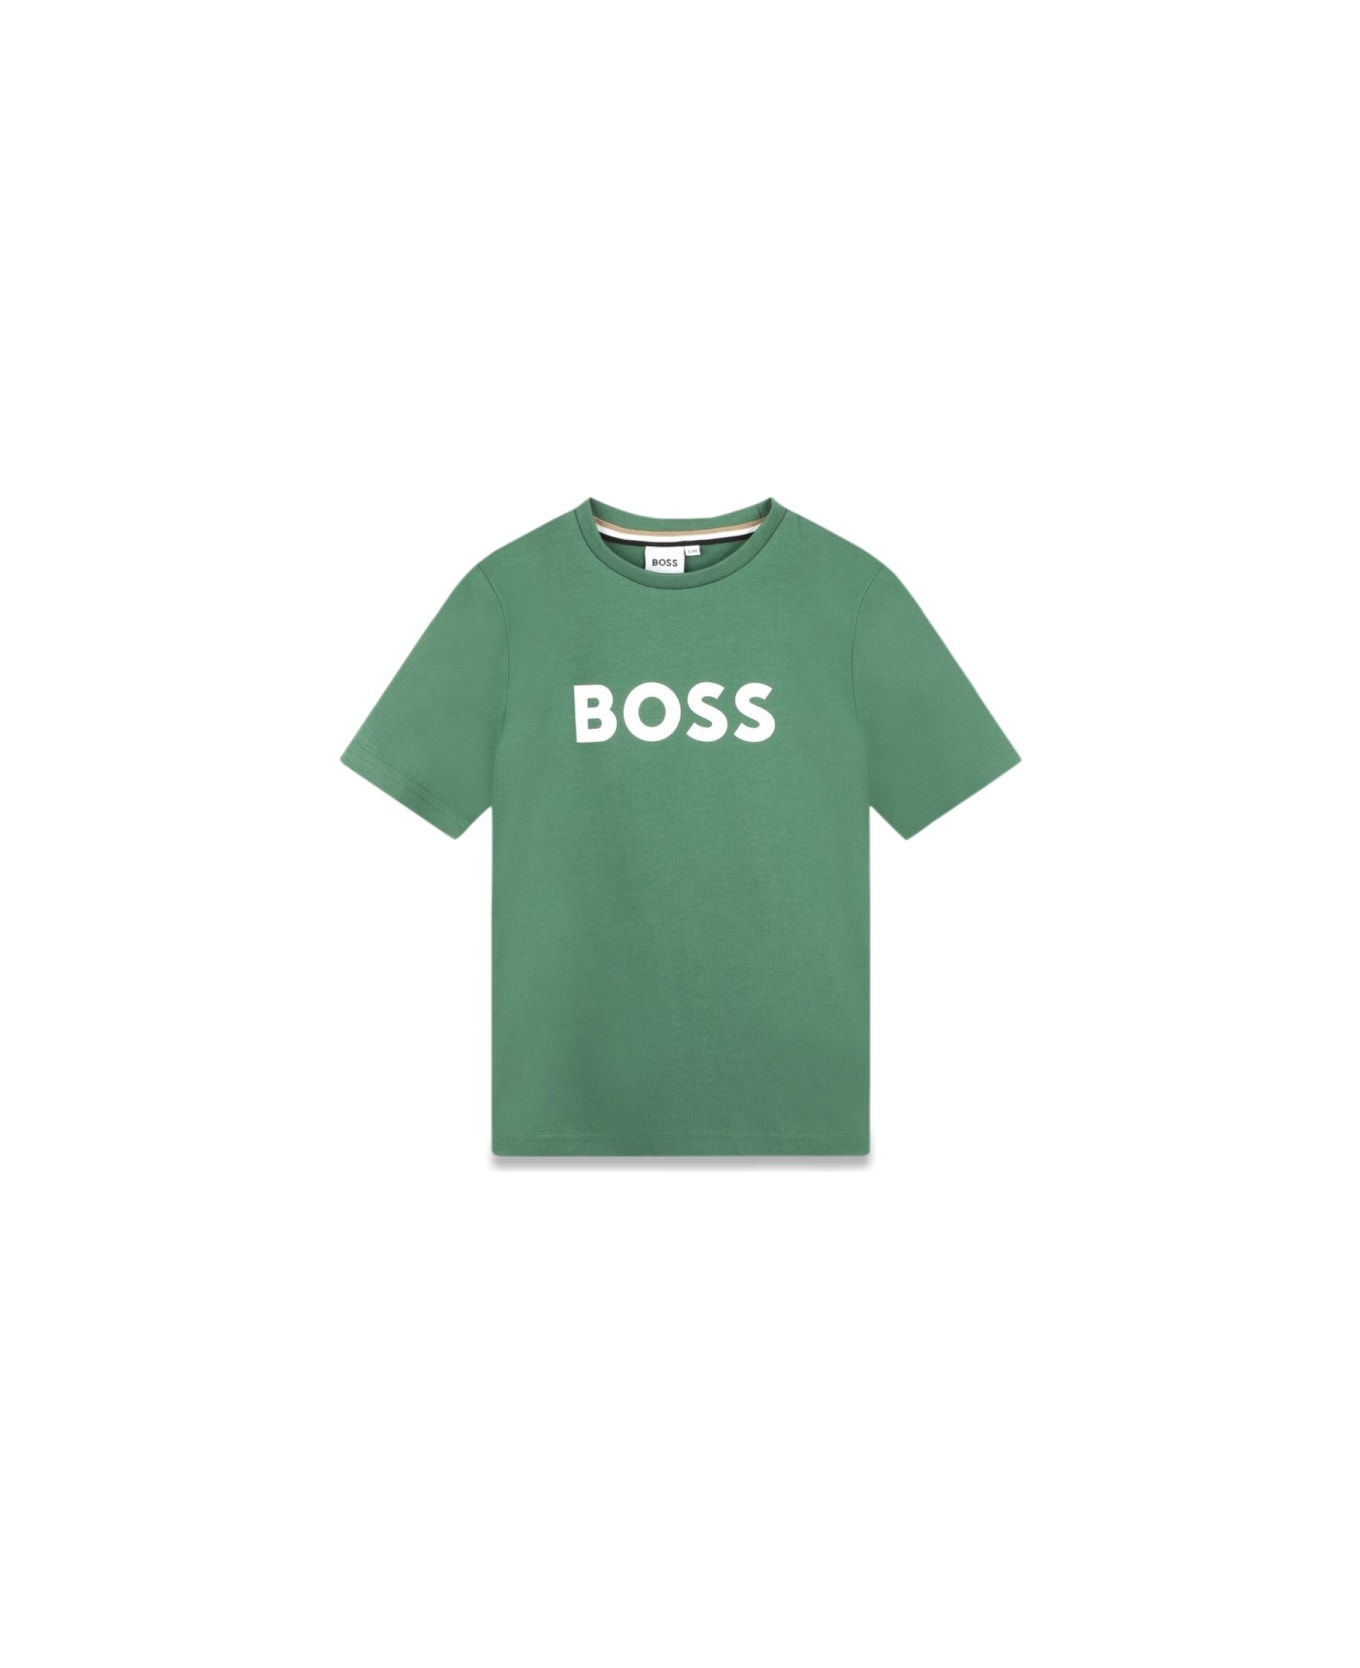 Hugo Boss Tee Shirt - BROWN